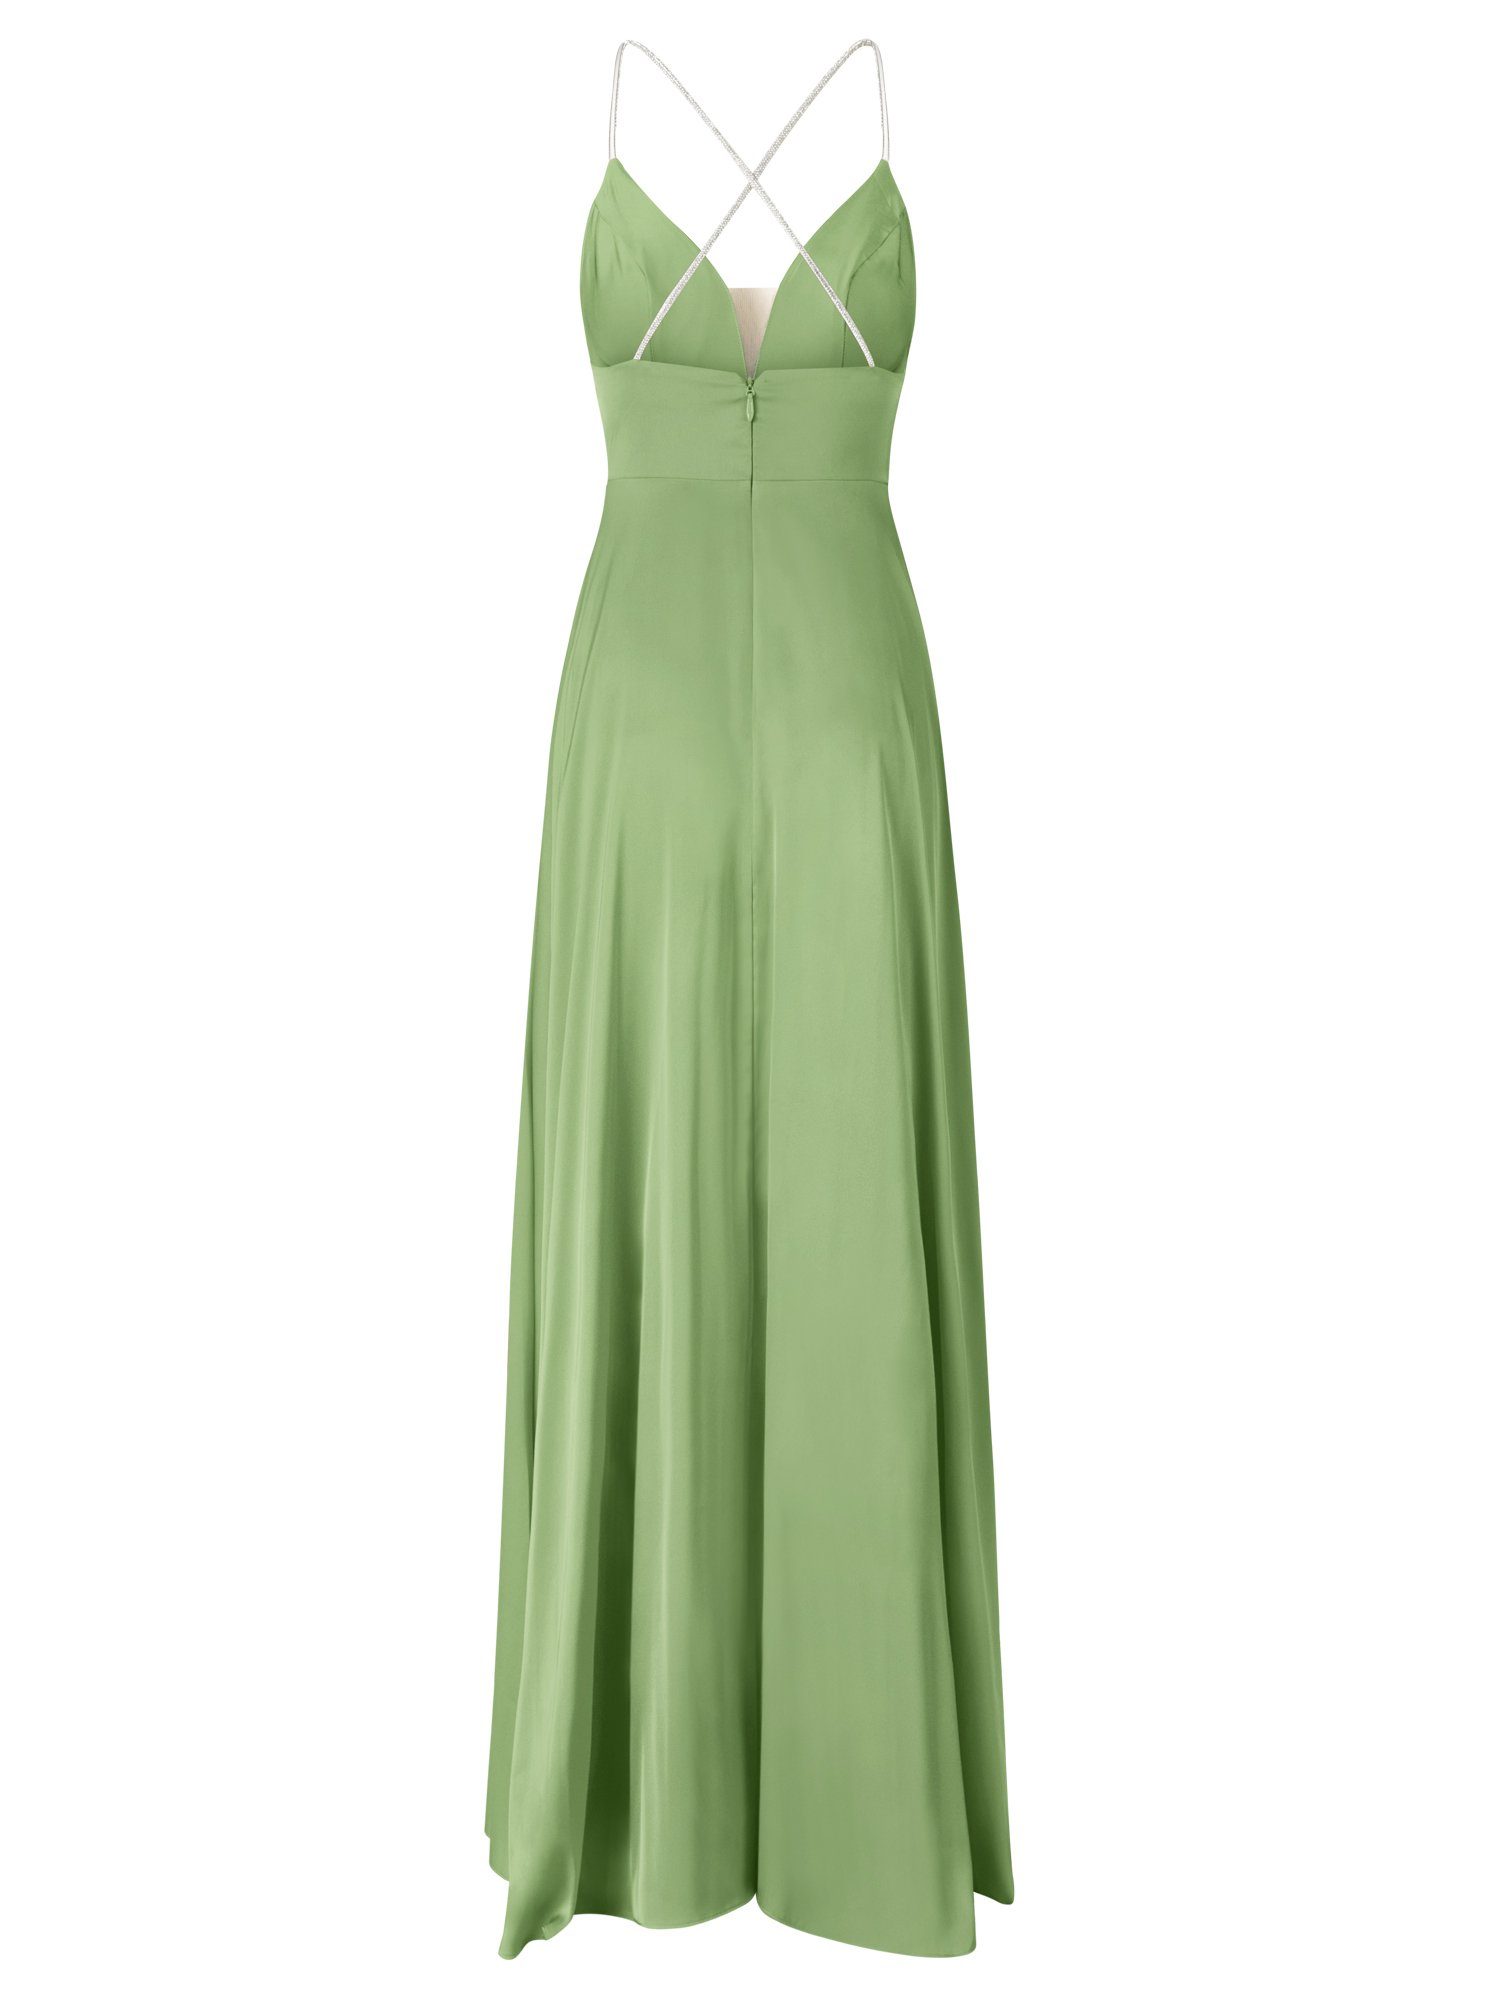 Stil mit elegantem hellgrün Apart Abendkleid